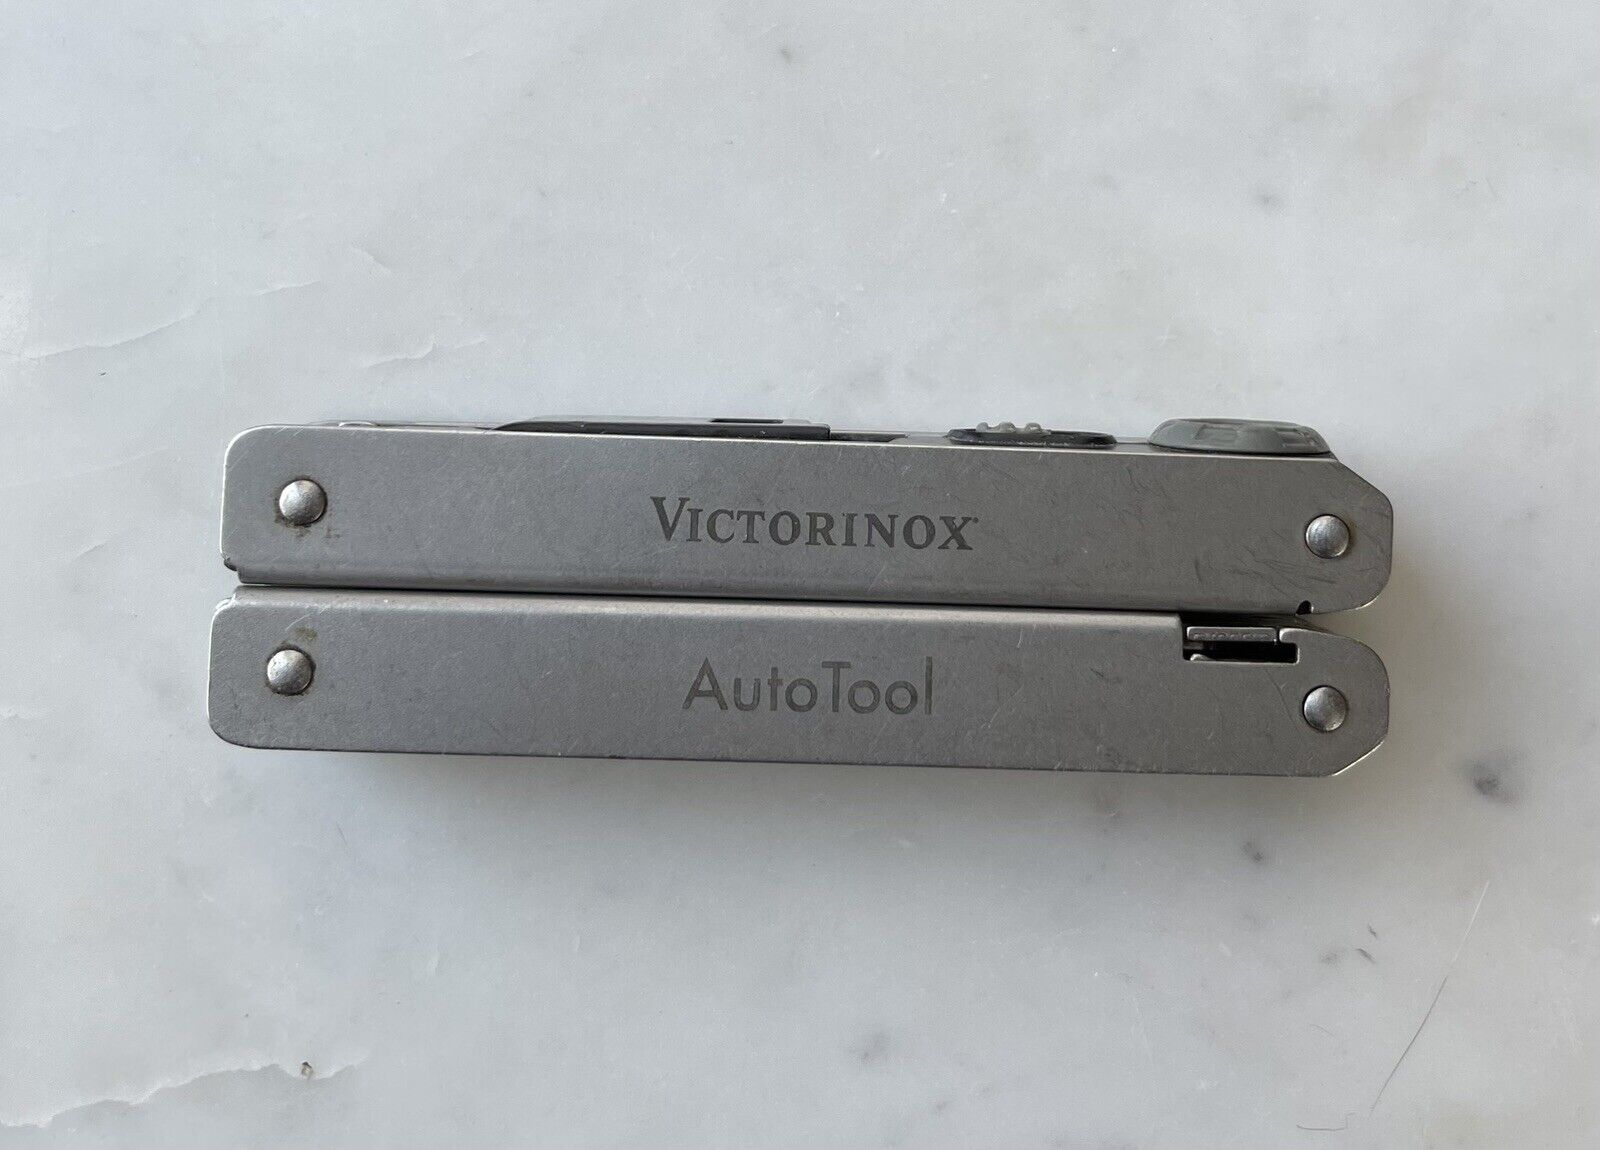 Victorinox Auto Tool No Sheath Rare Item, Collectible, Used Condition.